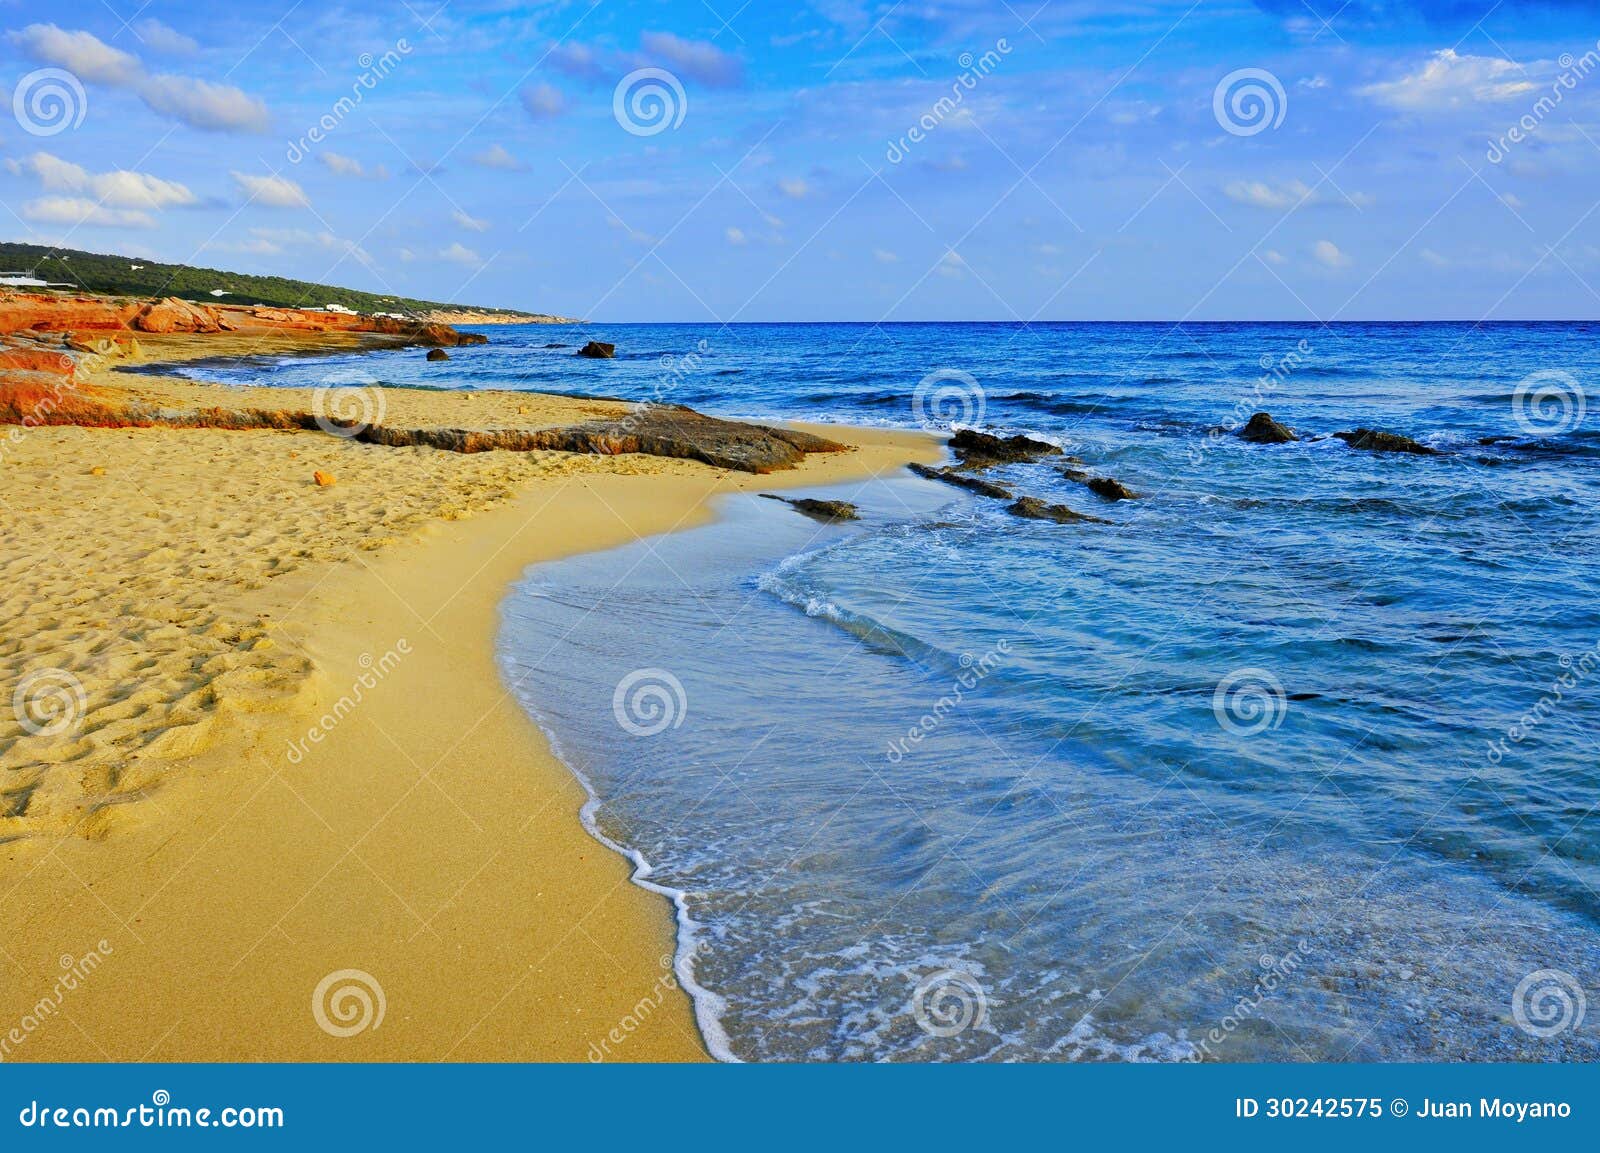 migjorn beach in formentera, balearic islands, spain